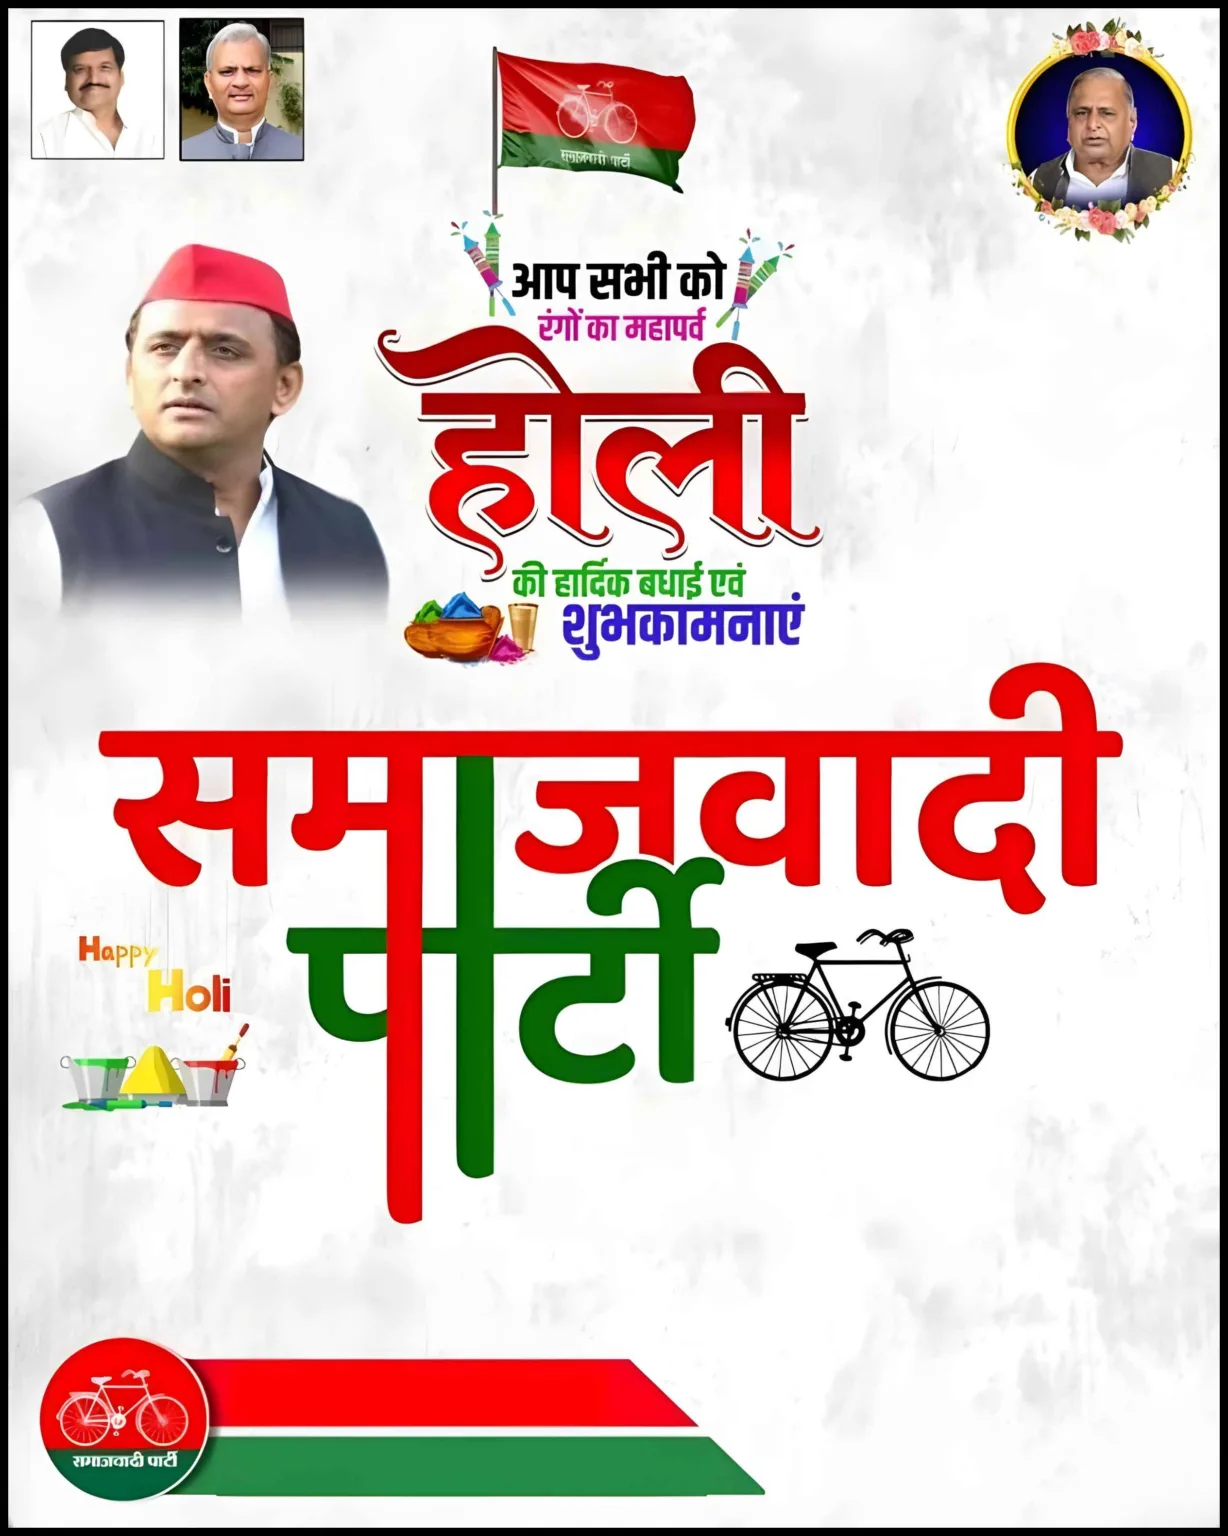 Holi ki Hardik Shubhkamnaye Poster PLP for Samajvadi Party